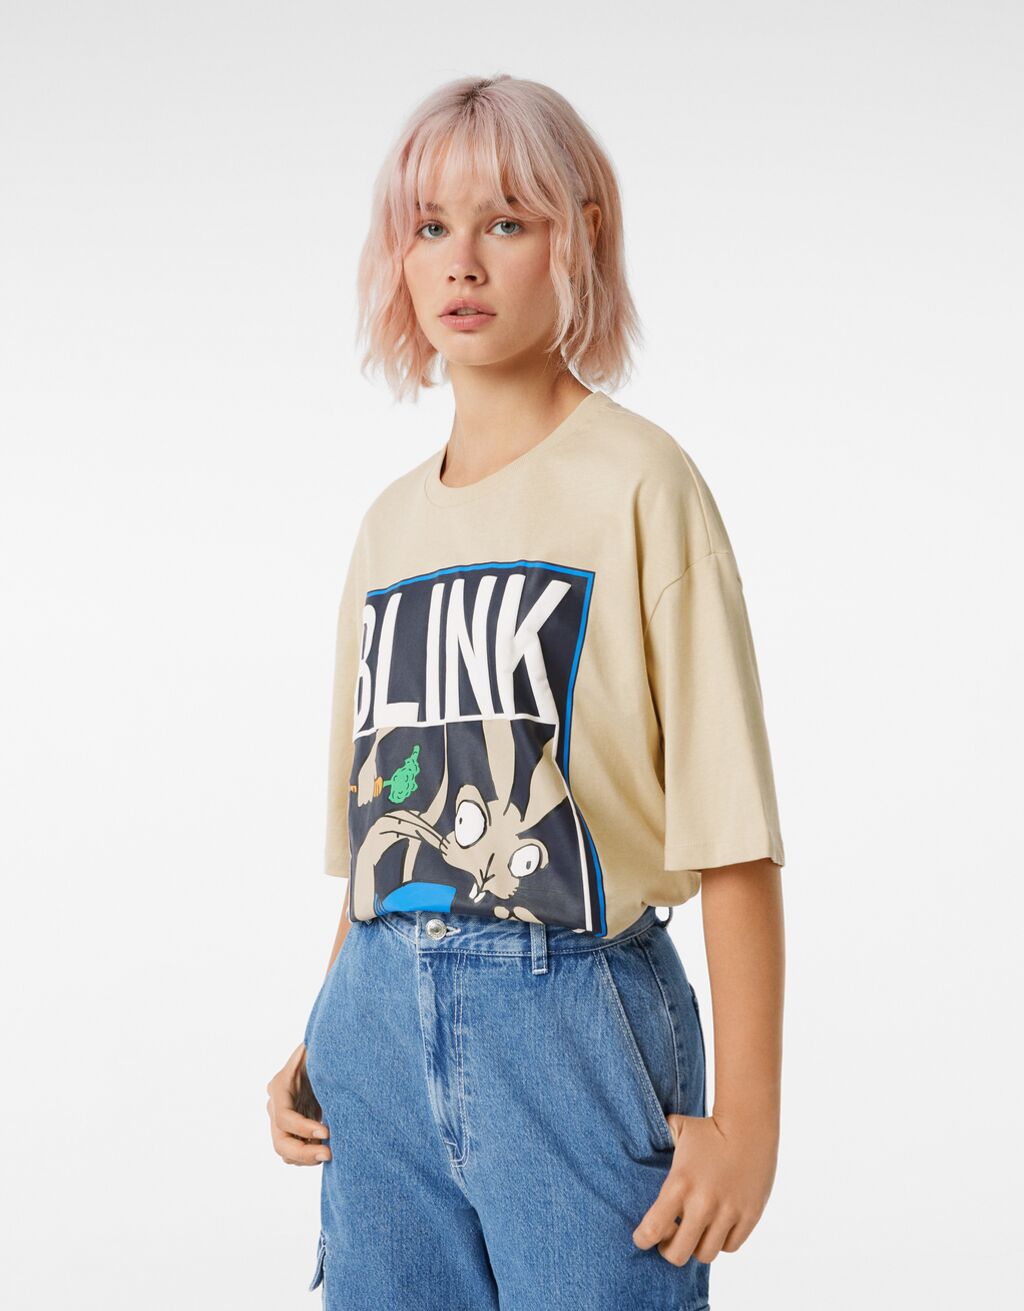 Camiseta manga curta oversize estampado Blink 182